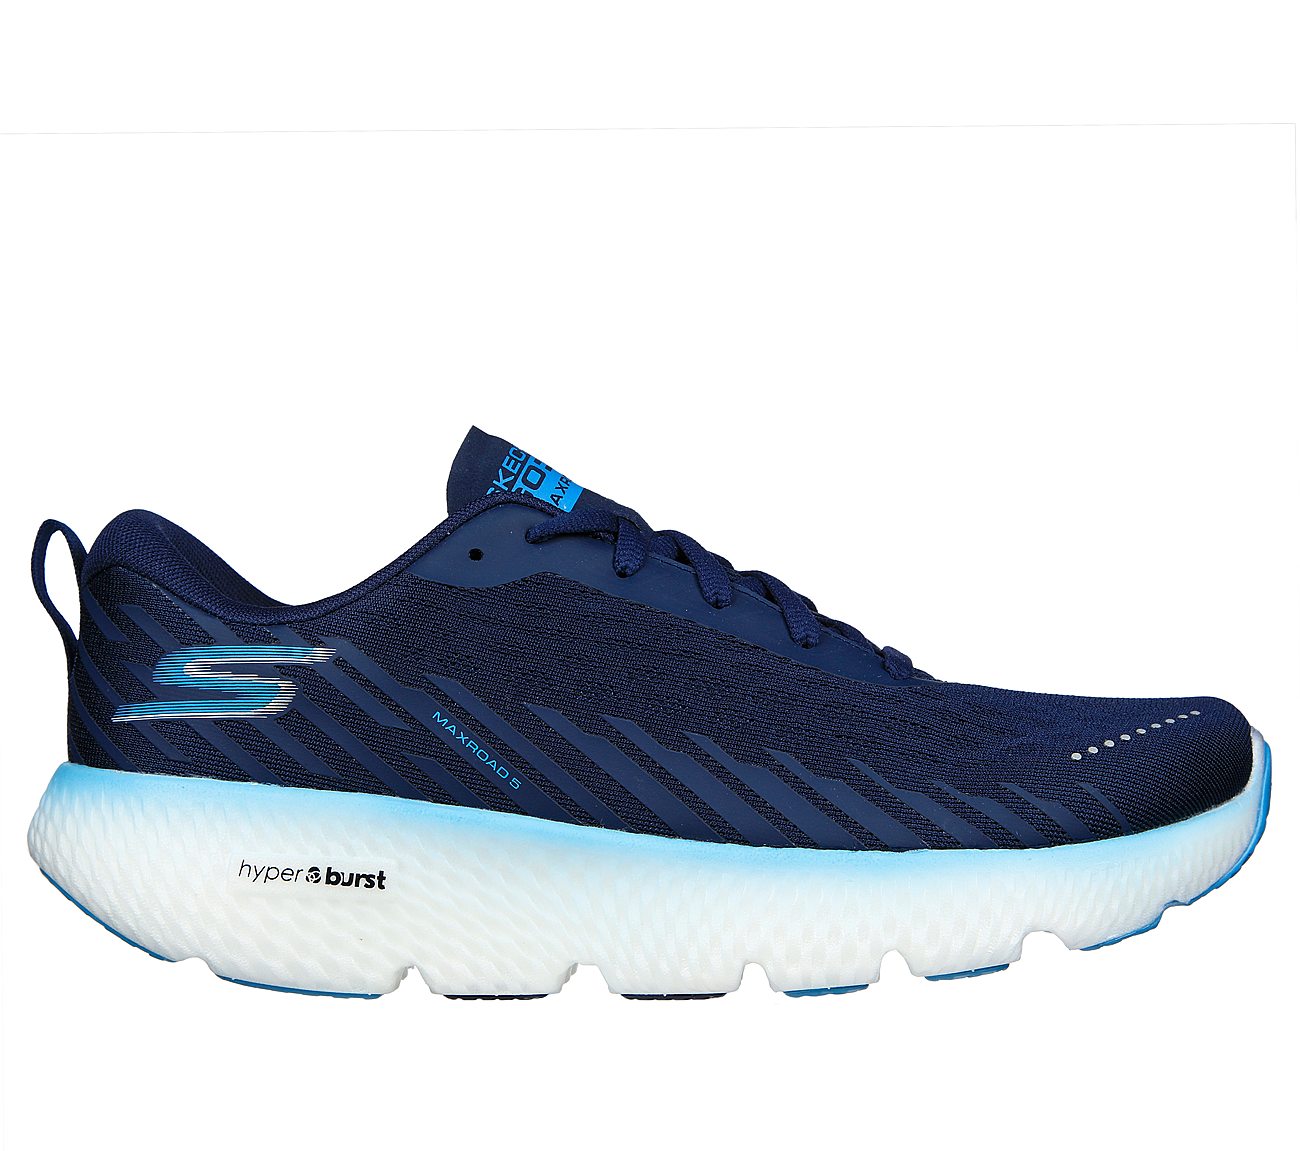 GO RUN MAXROAD 5, NAVY/BLUE Footwear Lateral View